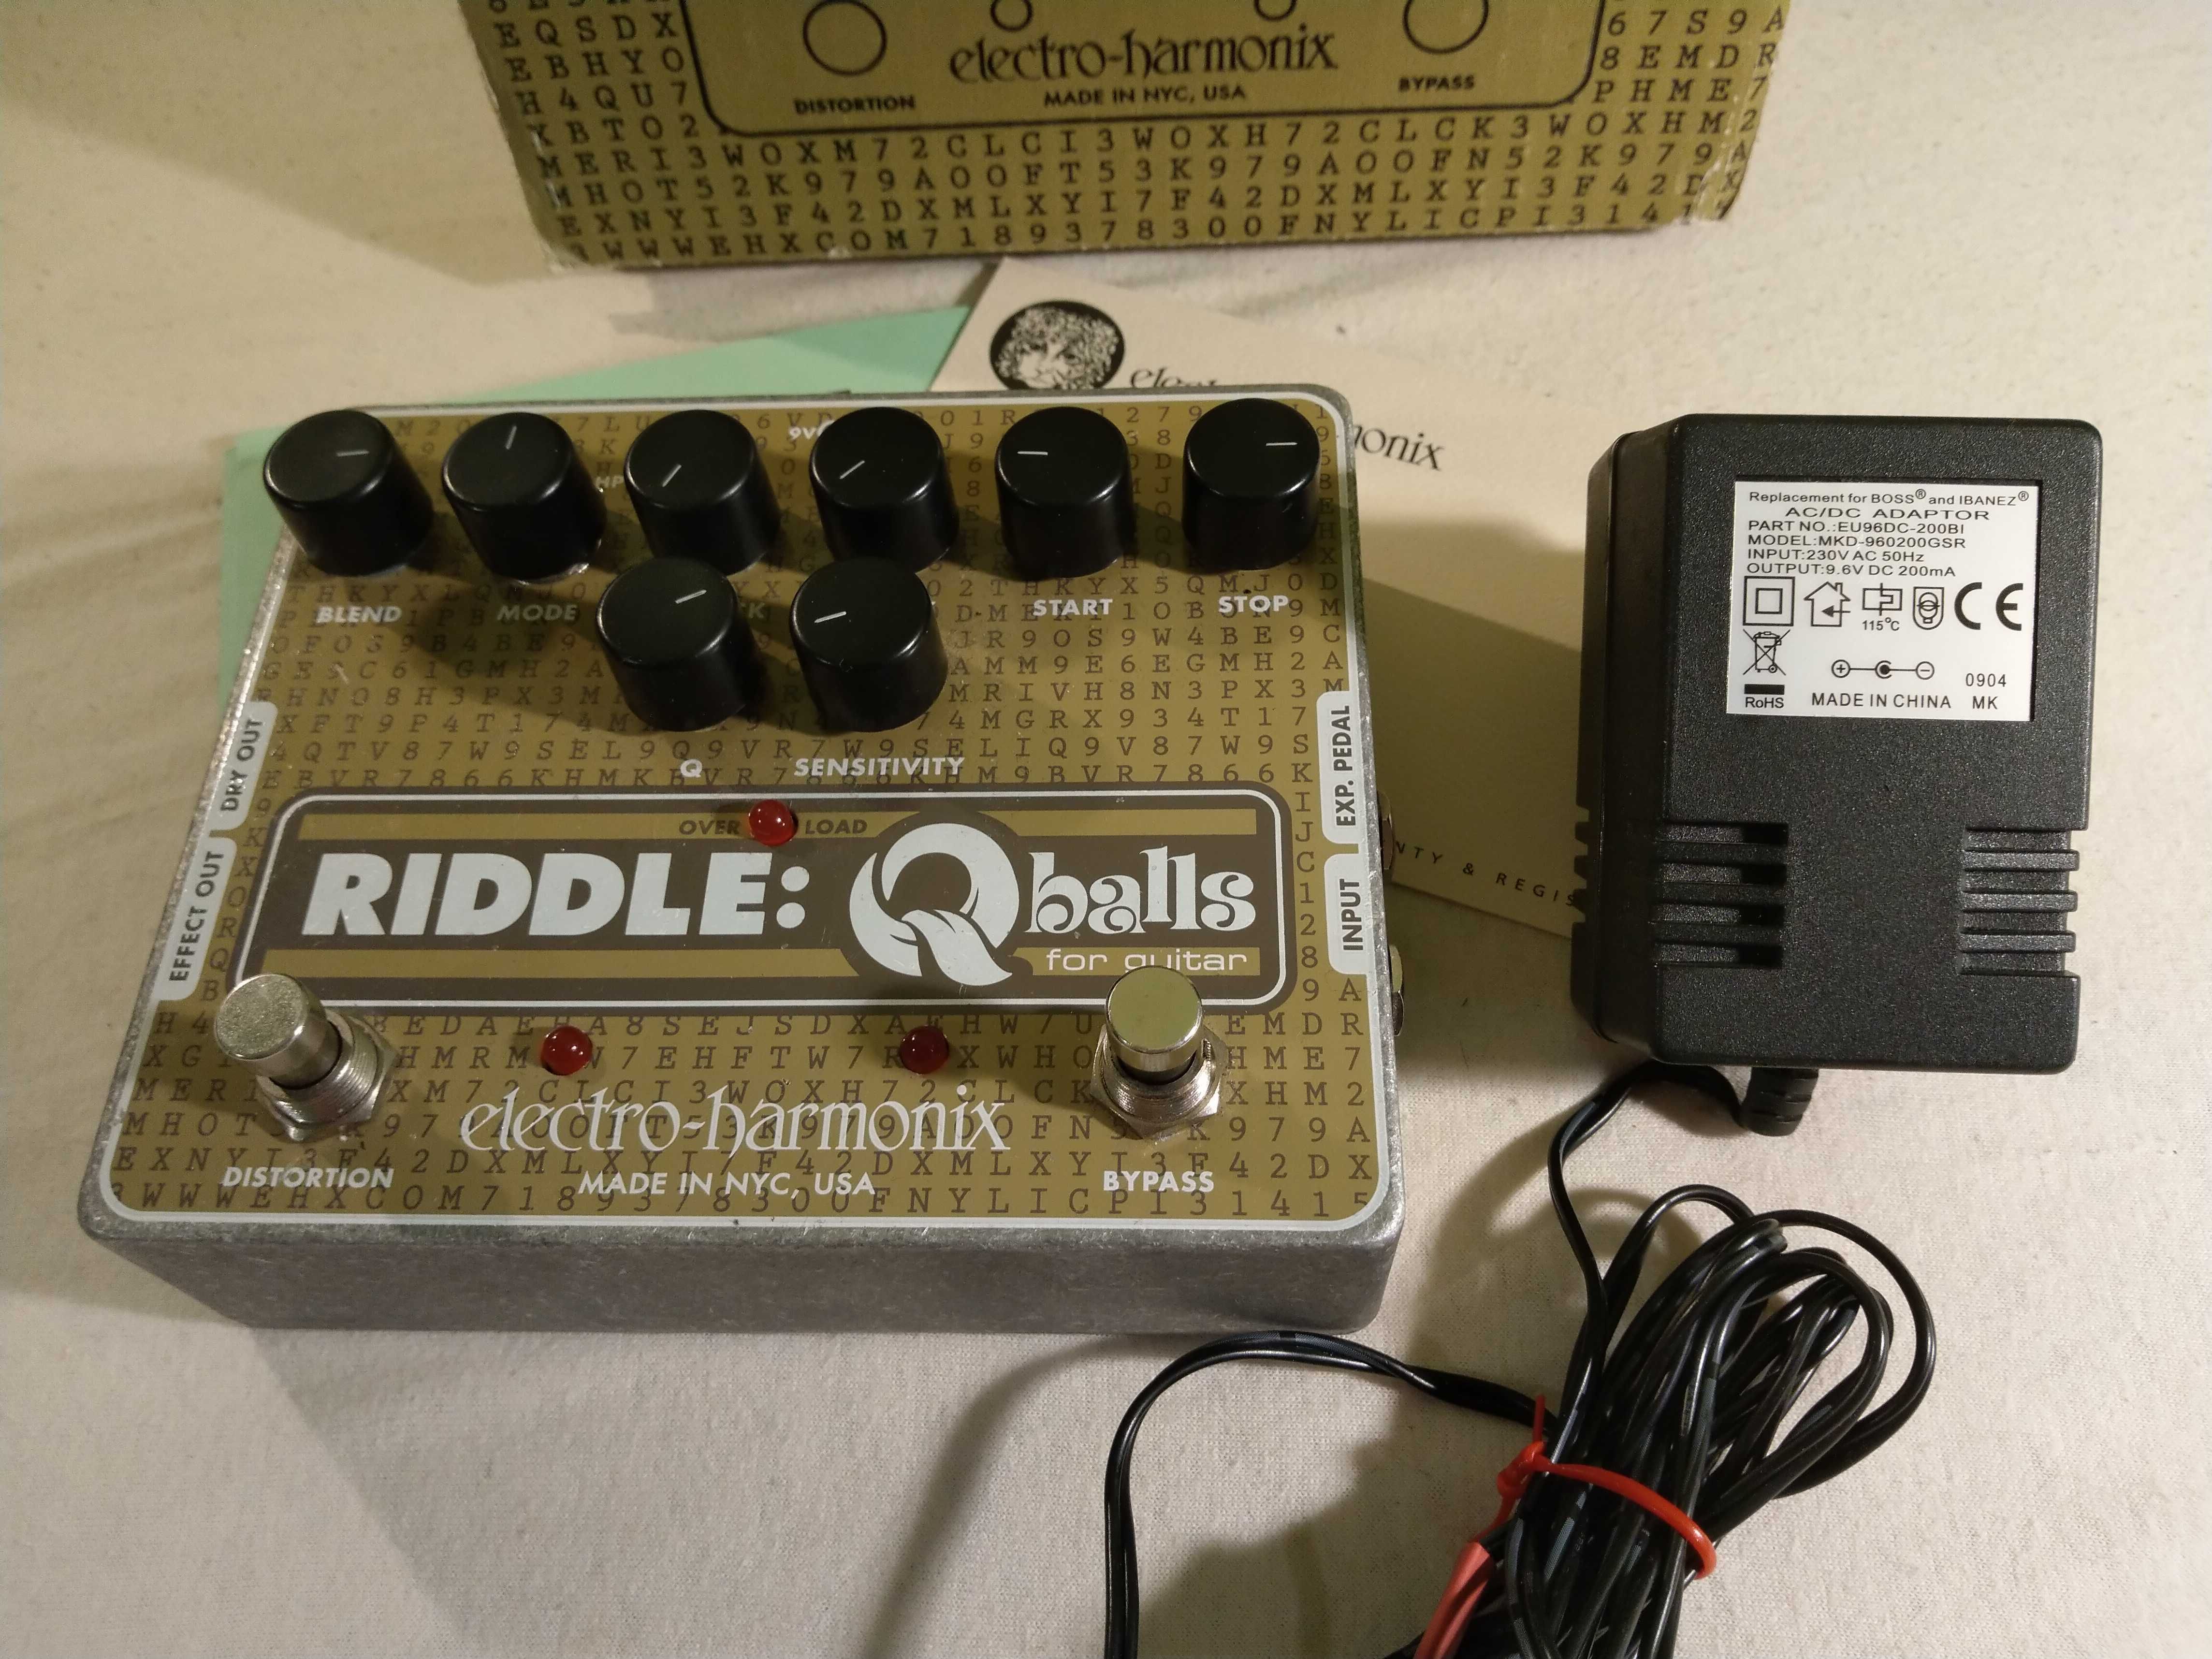 Electro Harmonix RIDDLE Q Balls